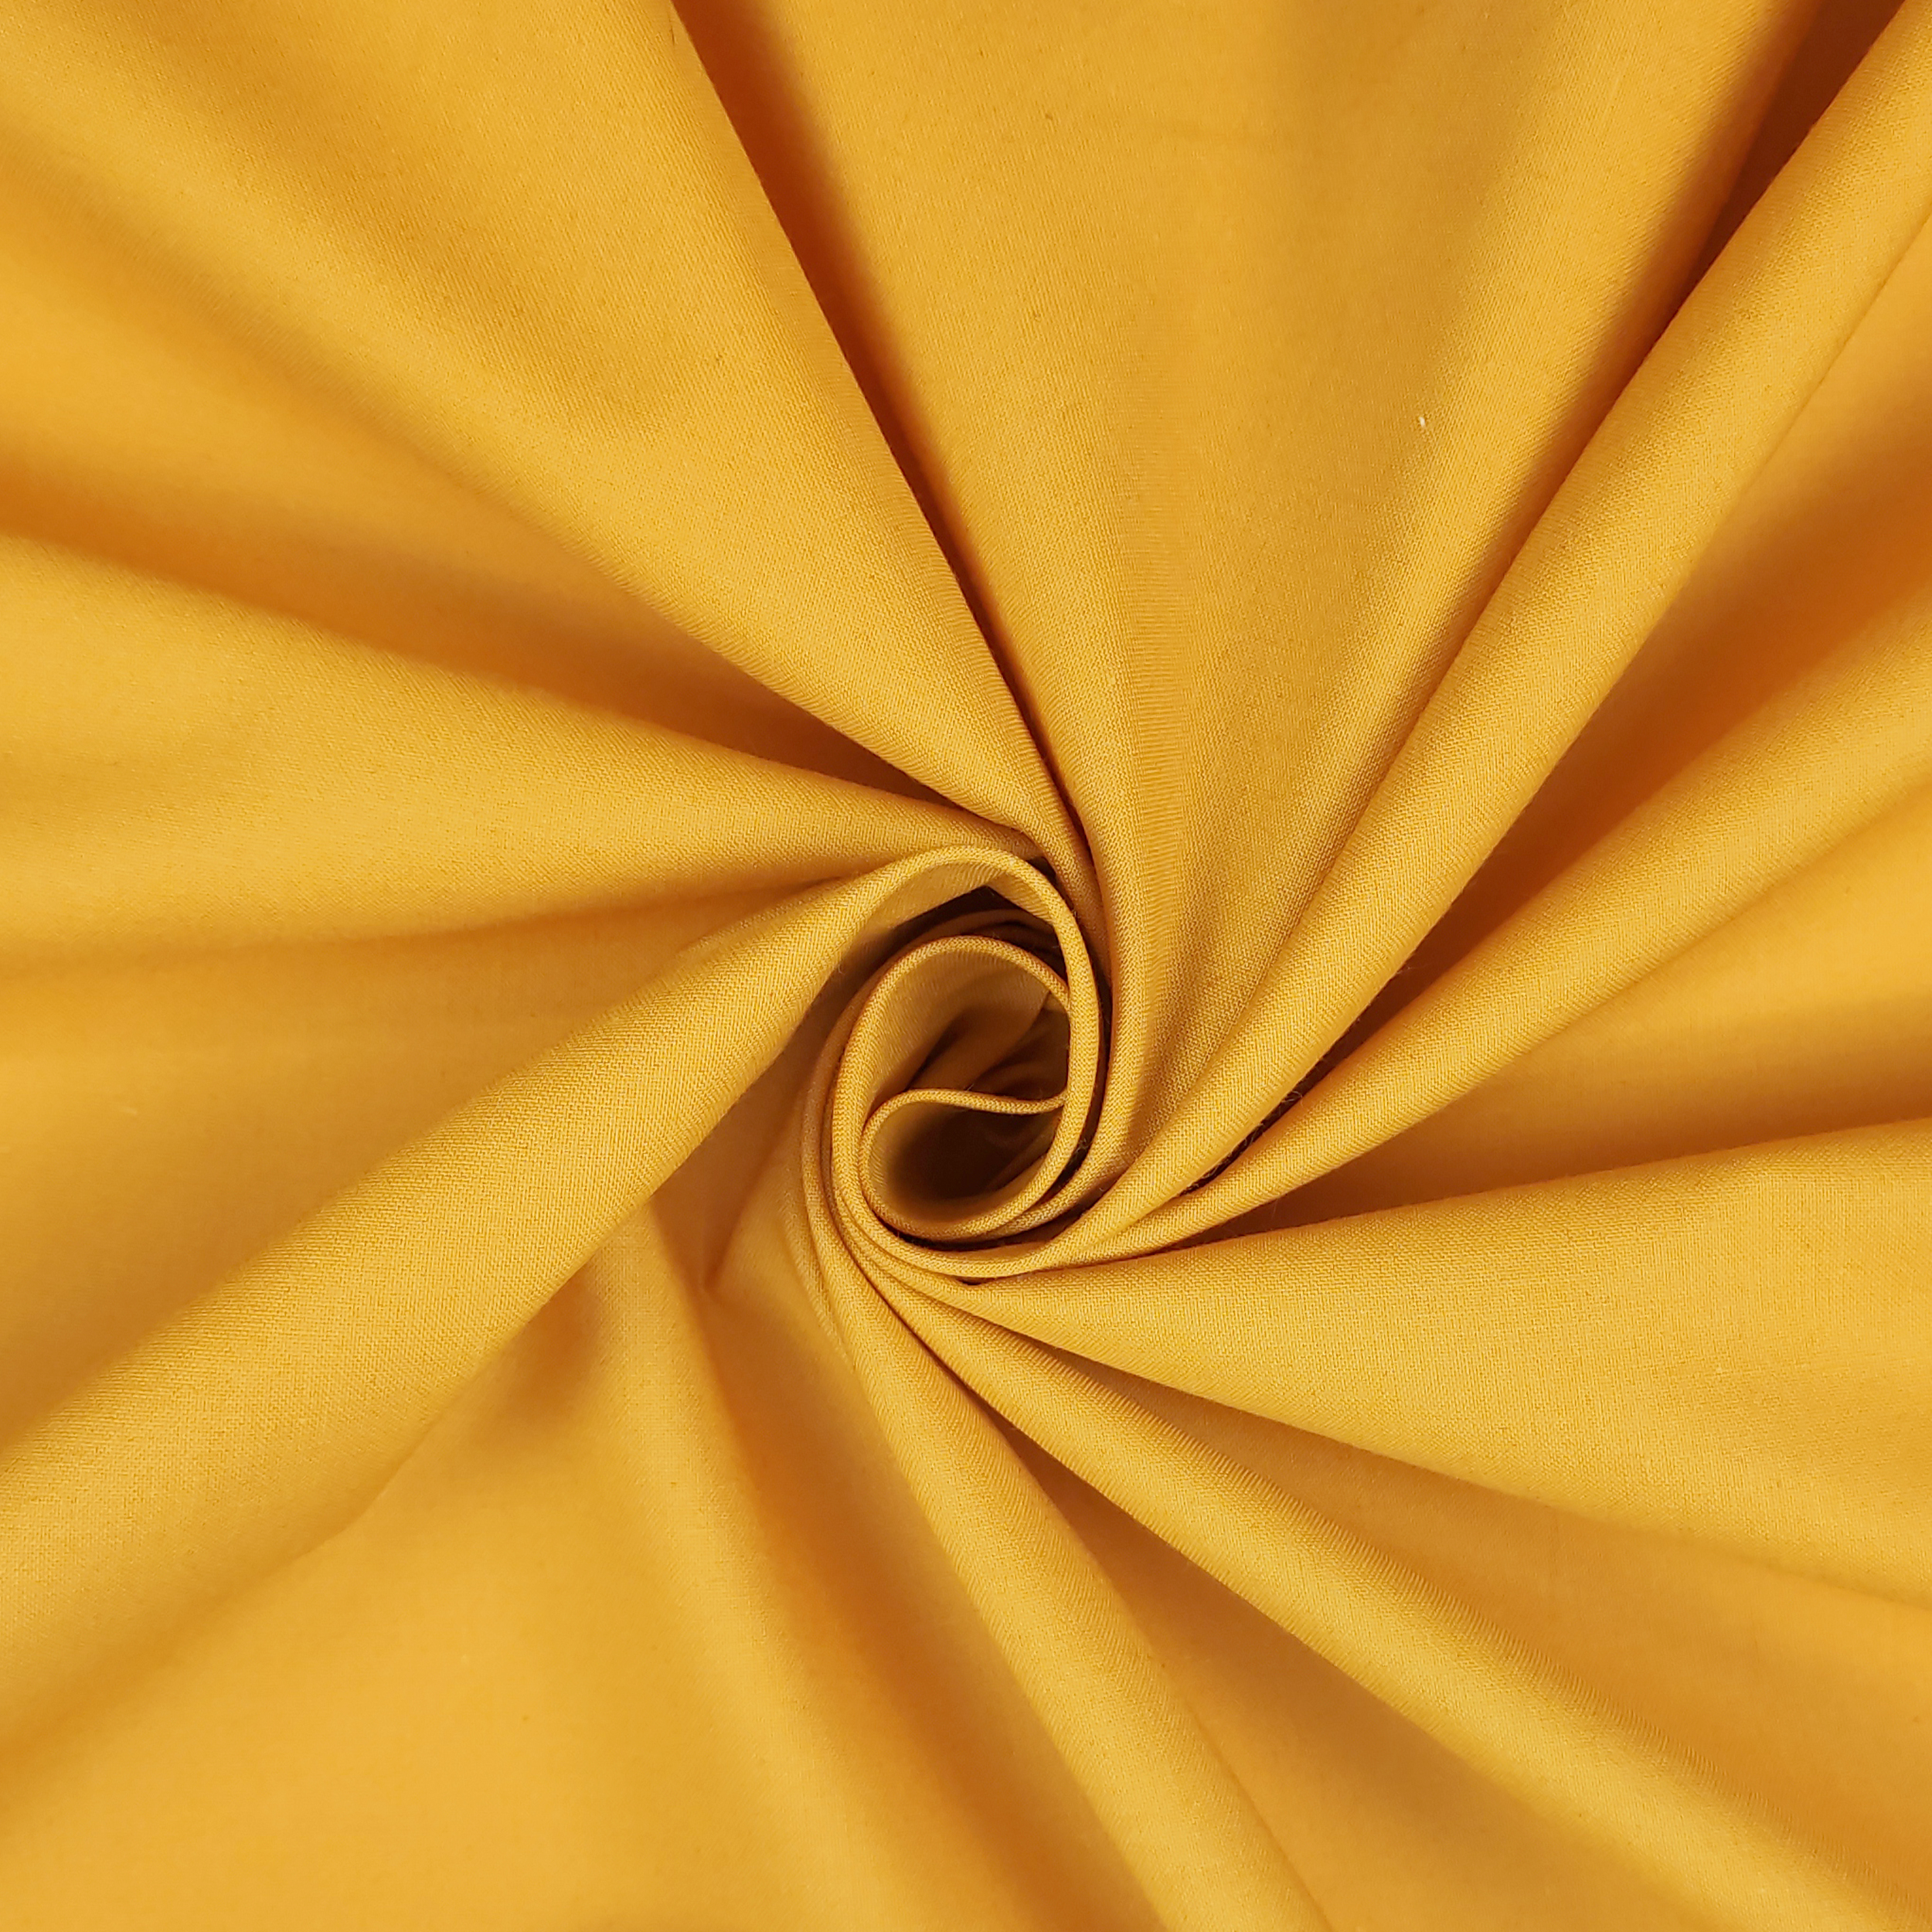 tessuto misto a cotone giallo scuro